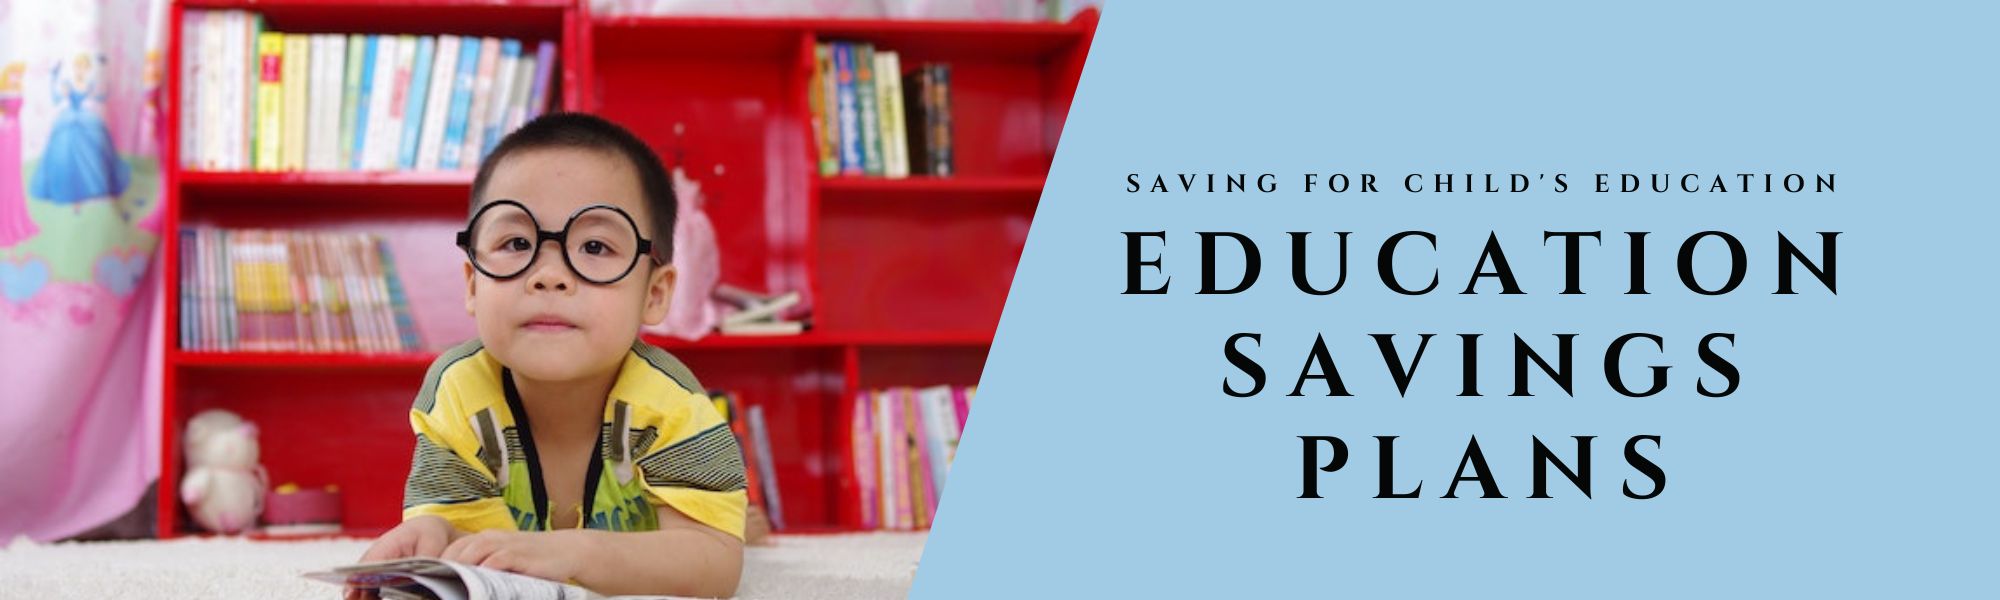 Saving for Child's Education_Education Savings Plans